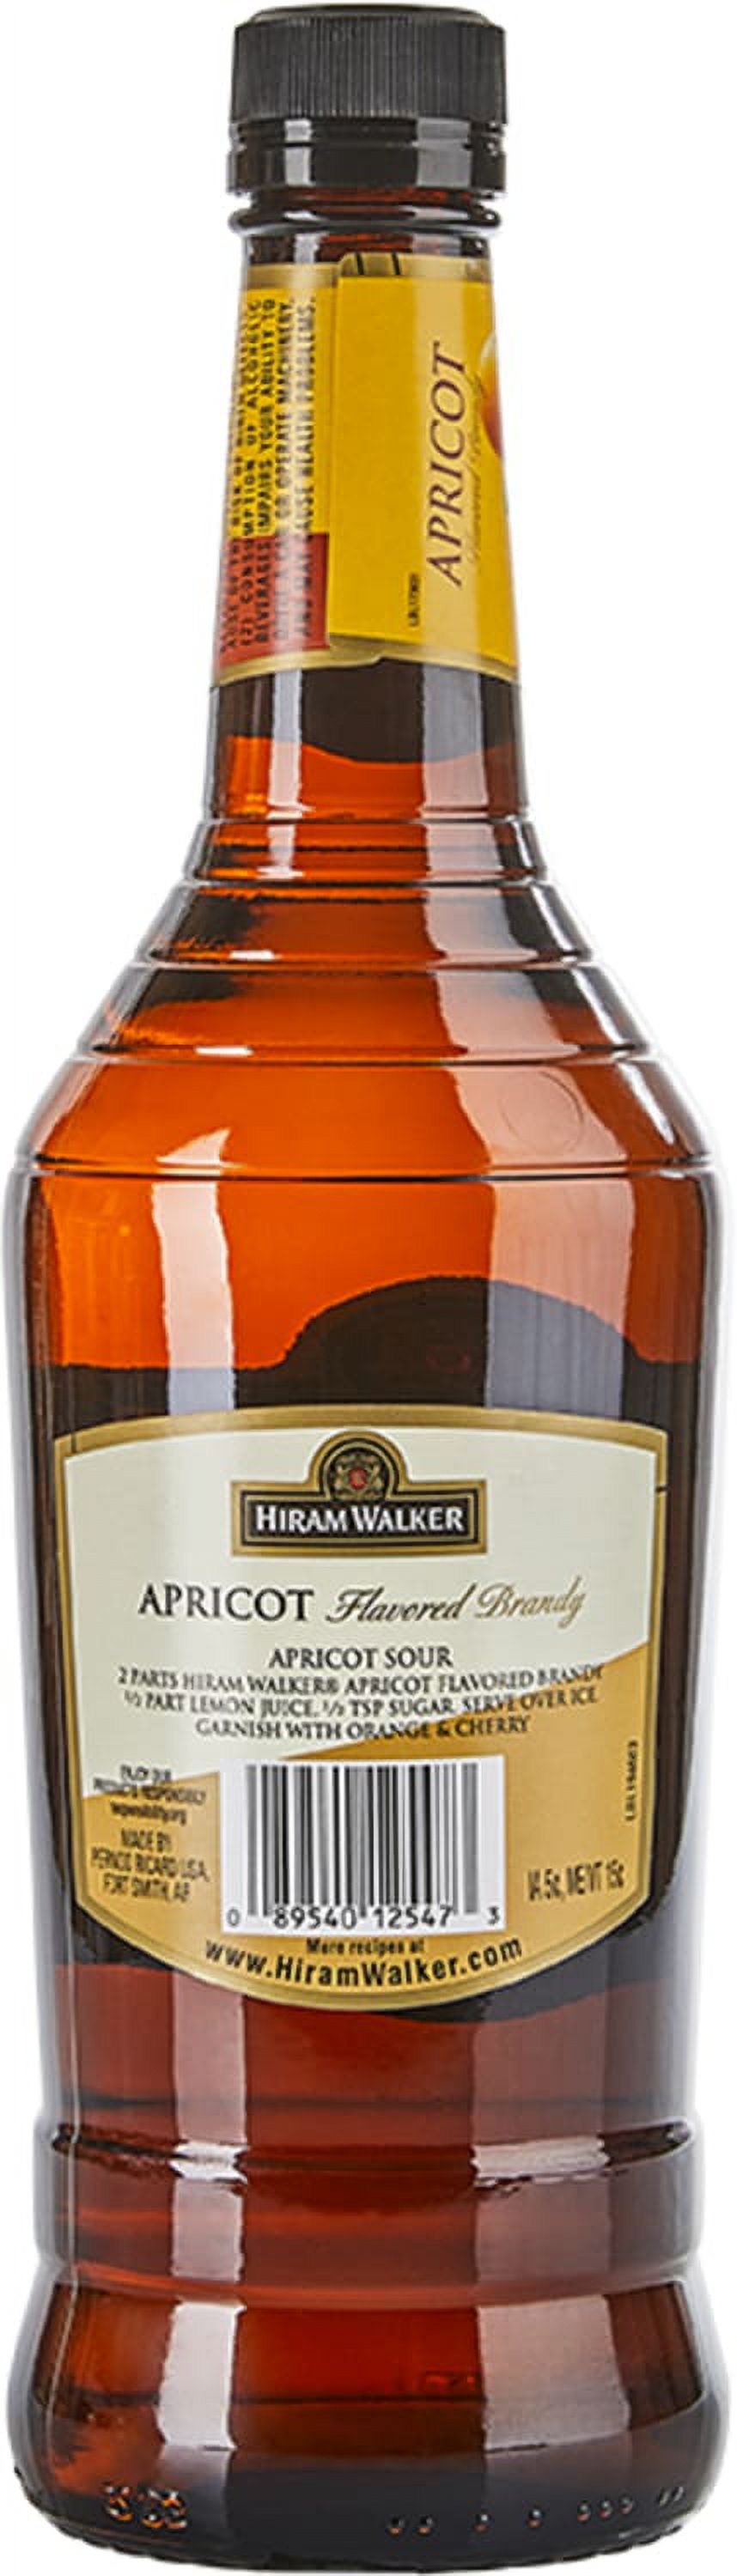 Hiram Walker Apricot Brandy 750mL Bottle - image 3 of 3